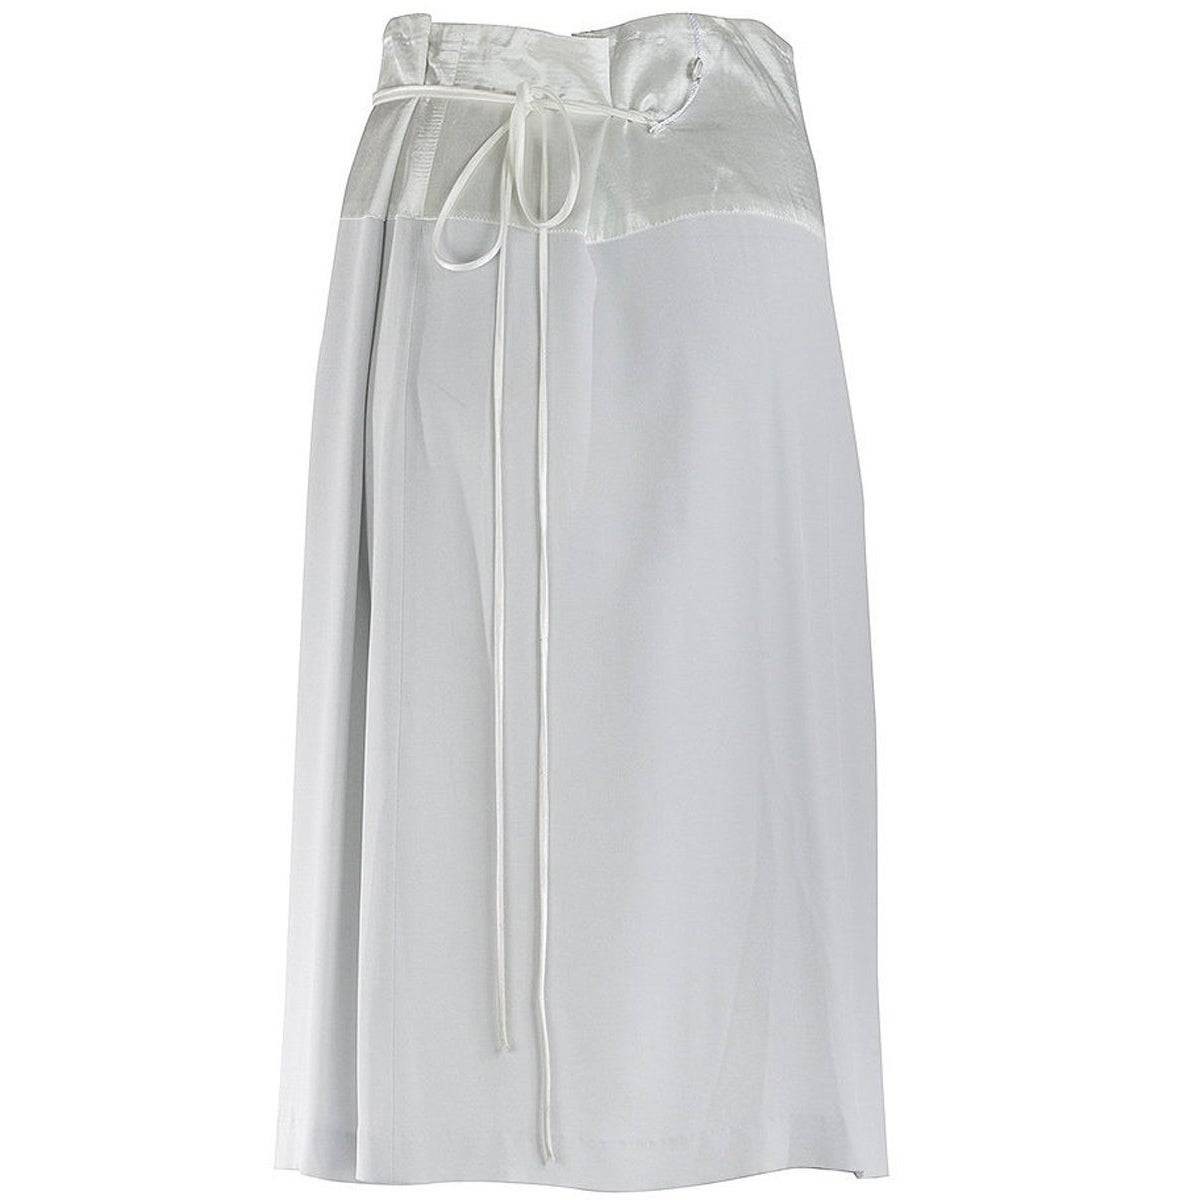  martin margiela drawstring skirt